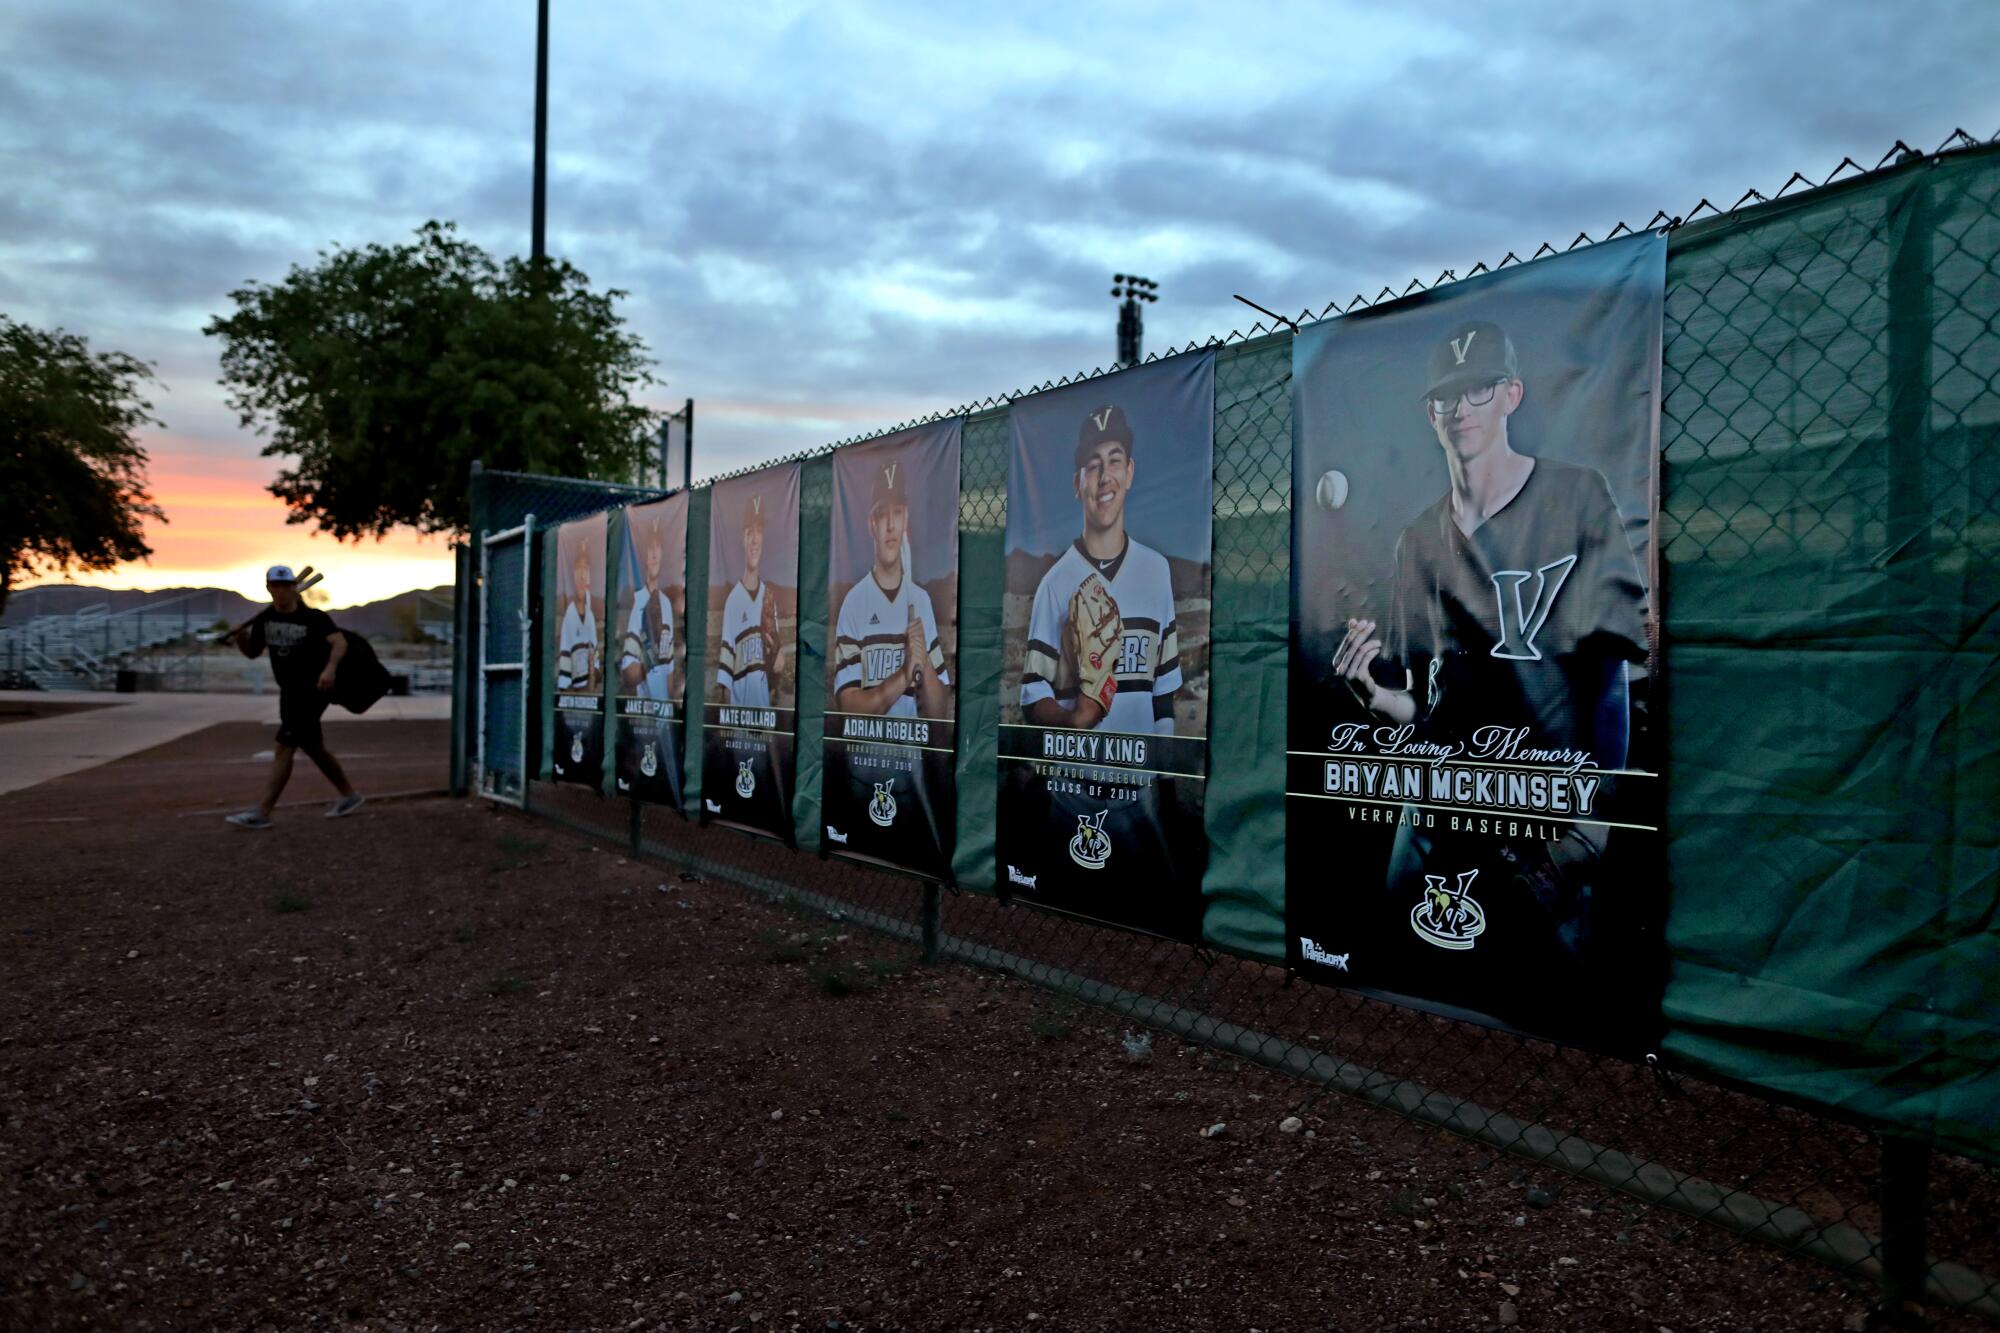 A banner in memory of Bryan McKinsey, far right, hangs along with banners for senior class members of the Verrado High School baseball team in Buckeye, Ariz.